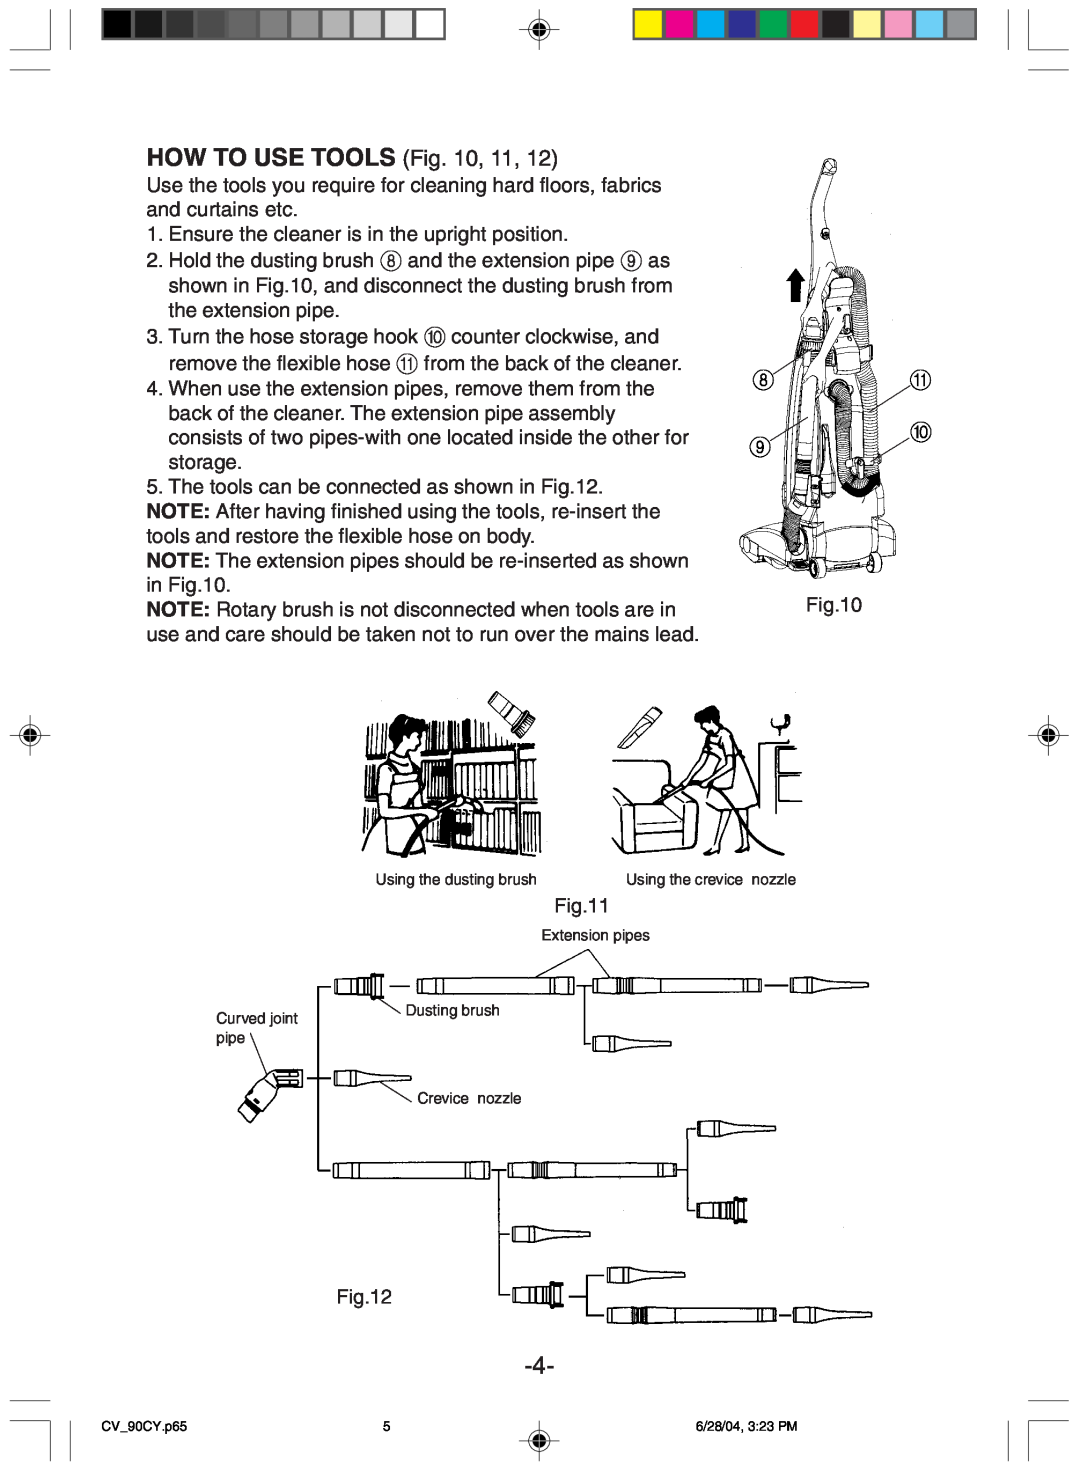 Hitachi CV-90CY manual HOW TO USE TOOLS Fig 